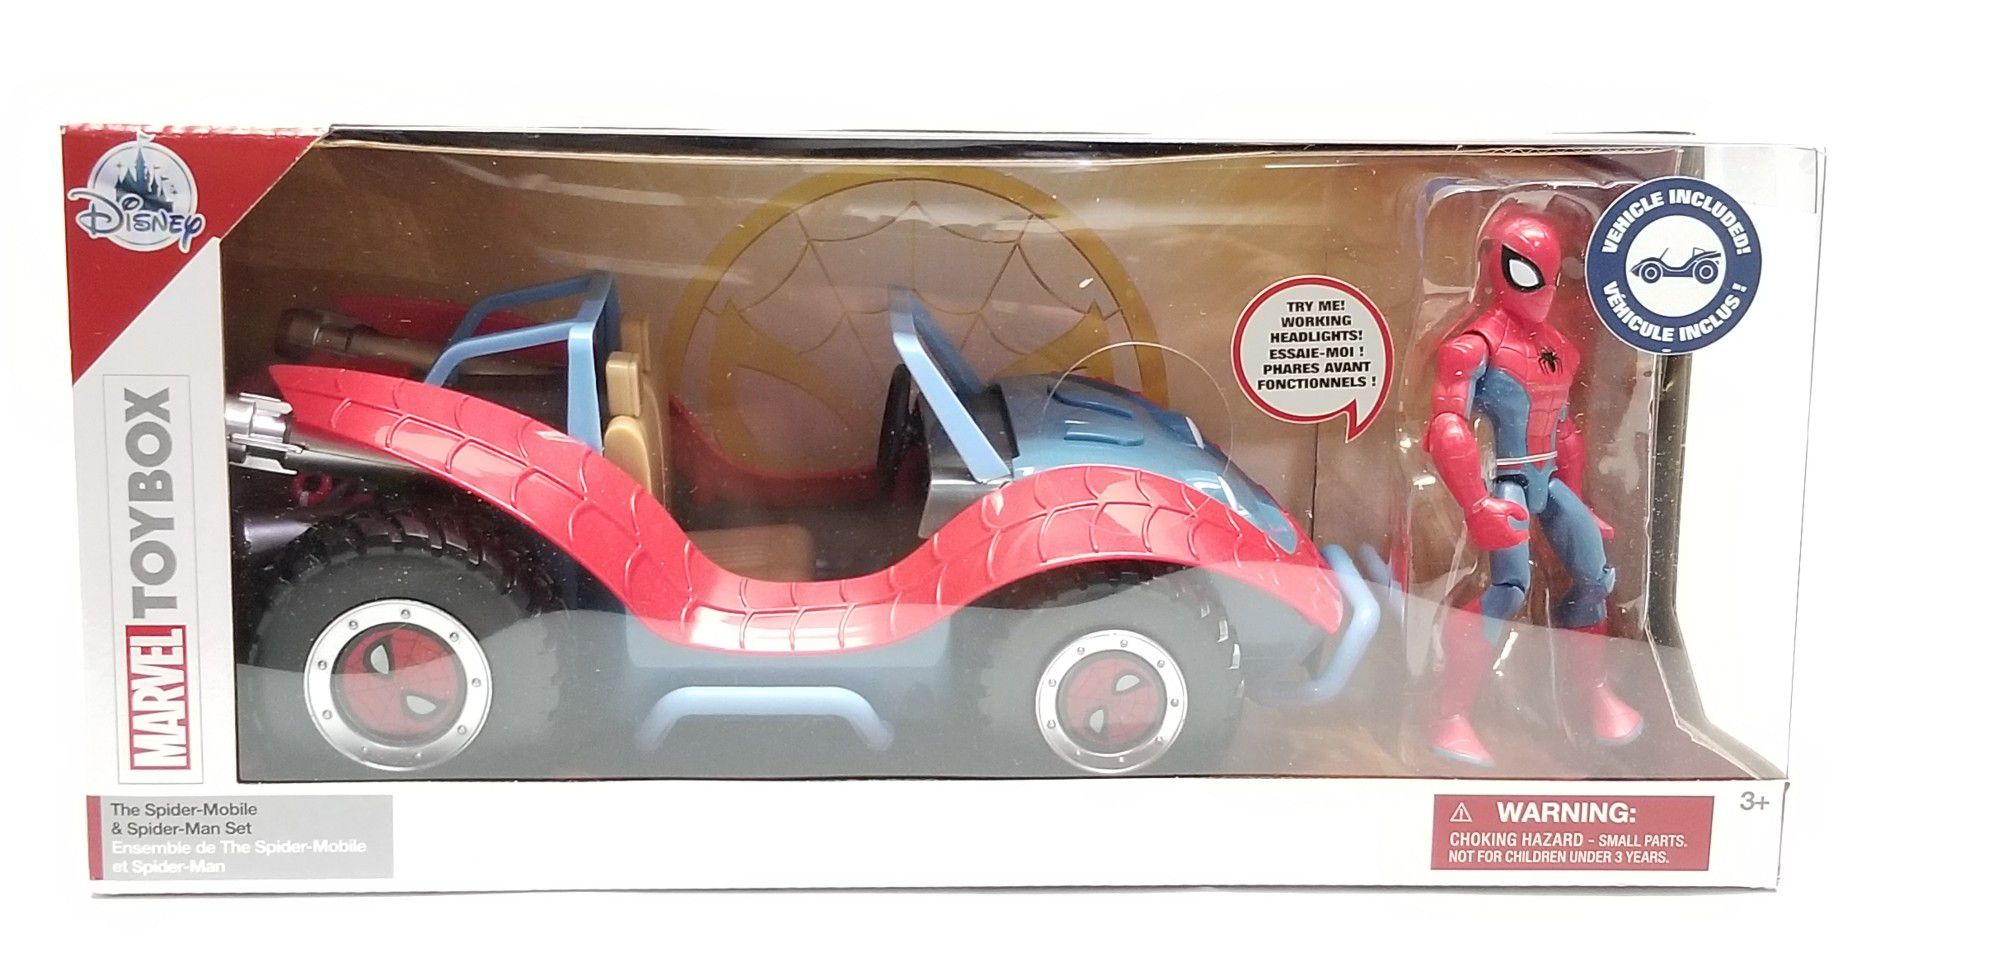 Disney Marvel Toybox Action Figure Collection The Spider-Mobile & Spider-Man Set